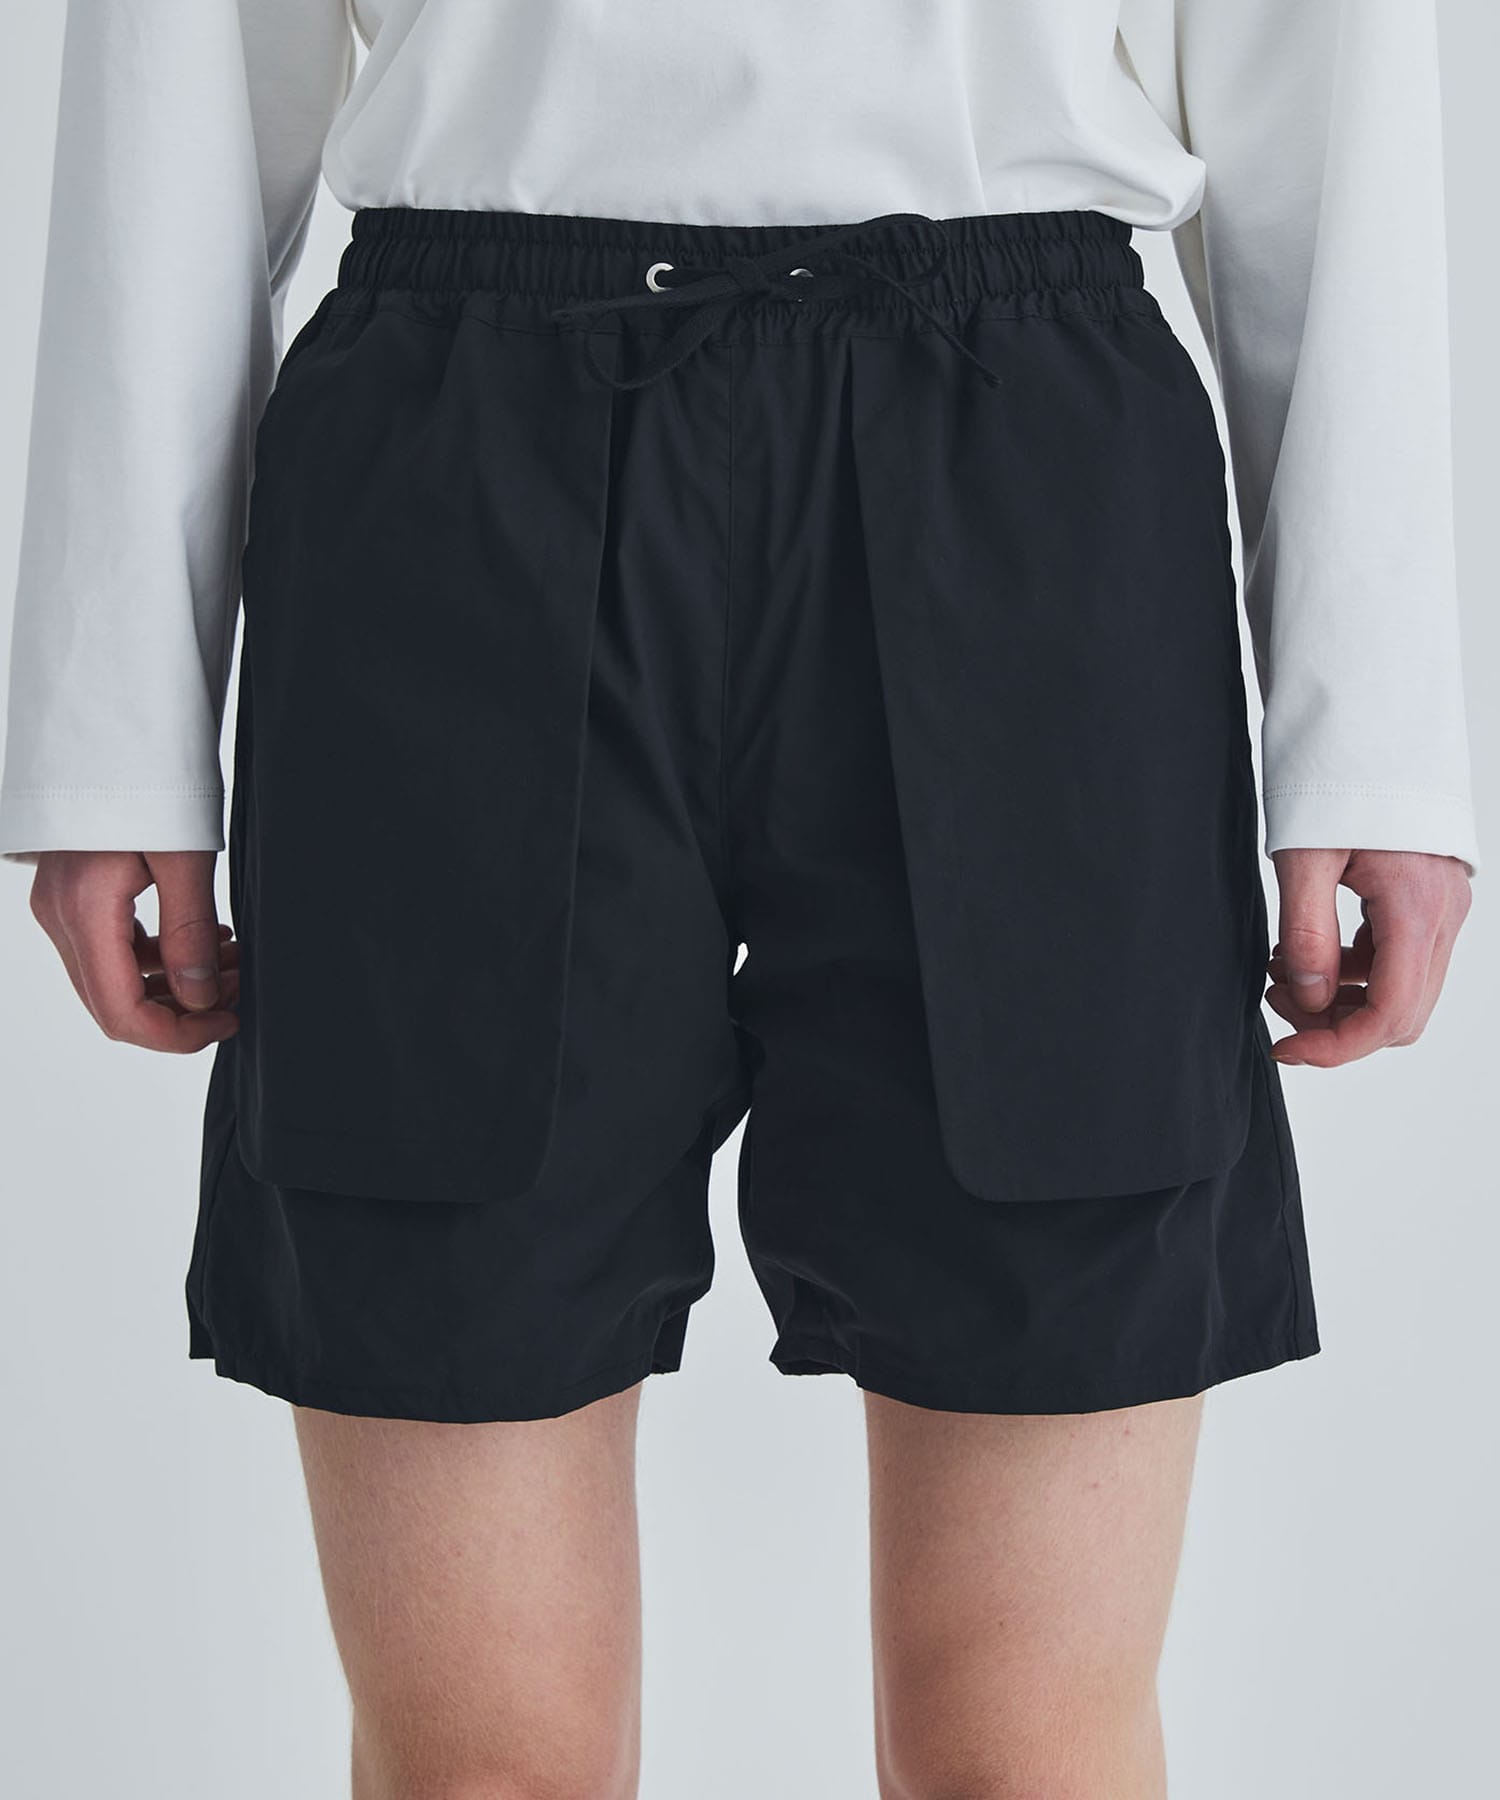 Reversible Shorts